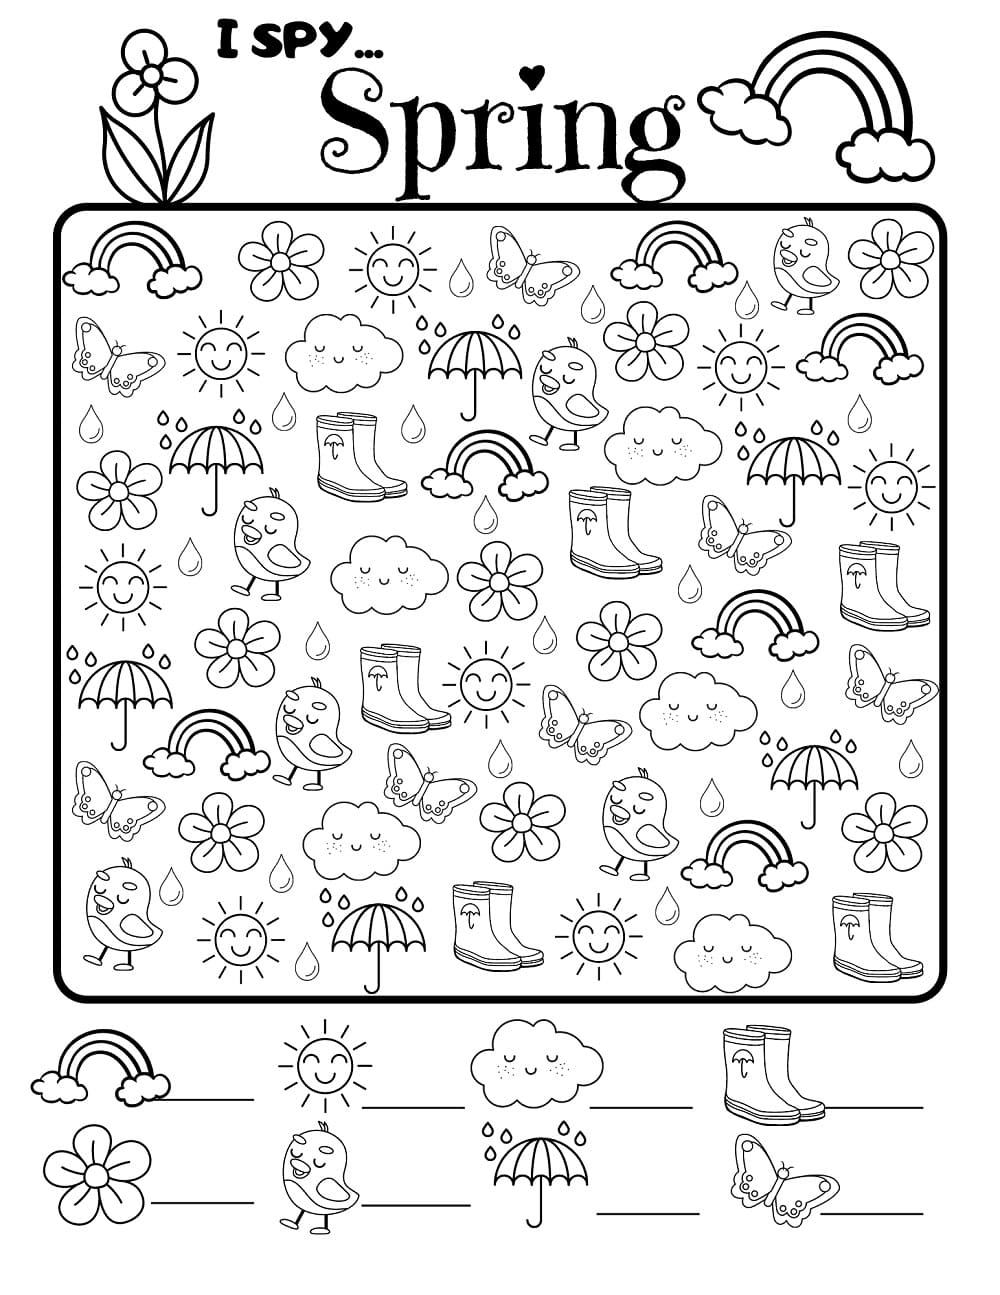 Printable Image of Spring I Spy